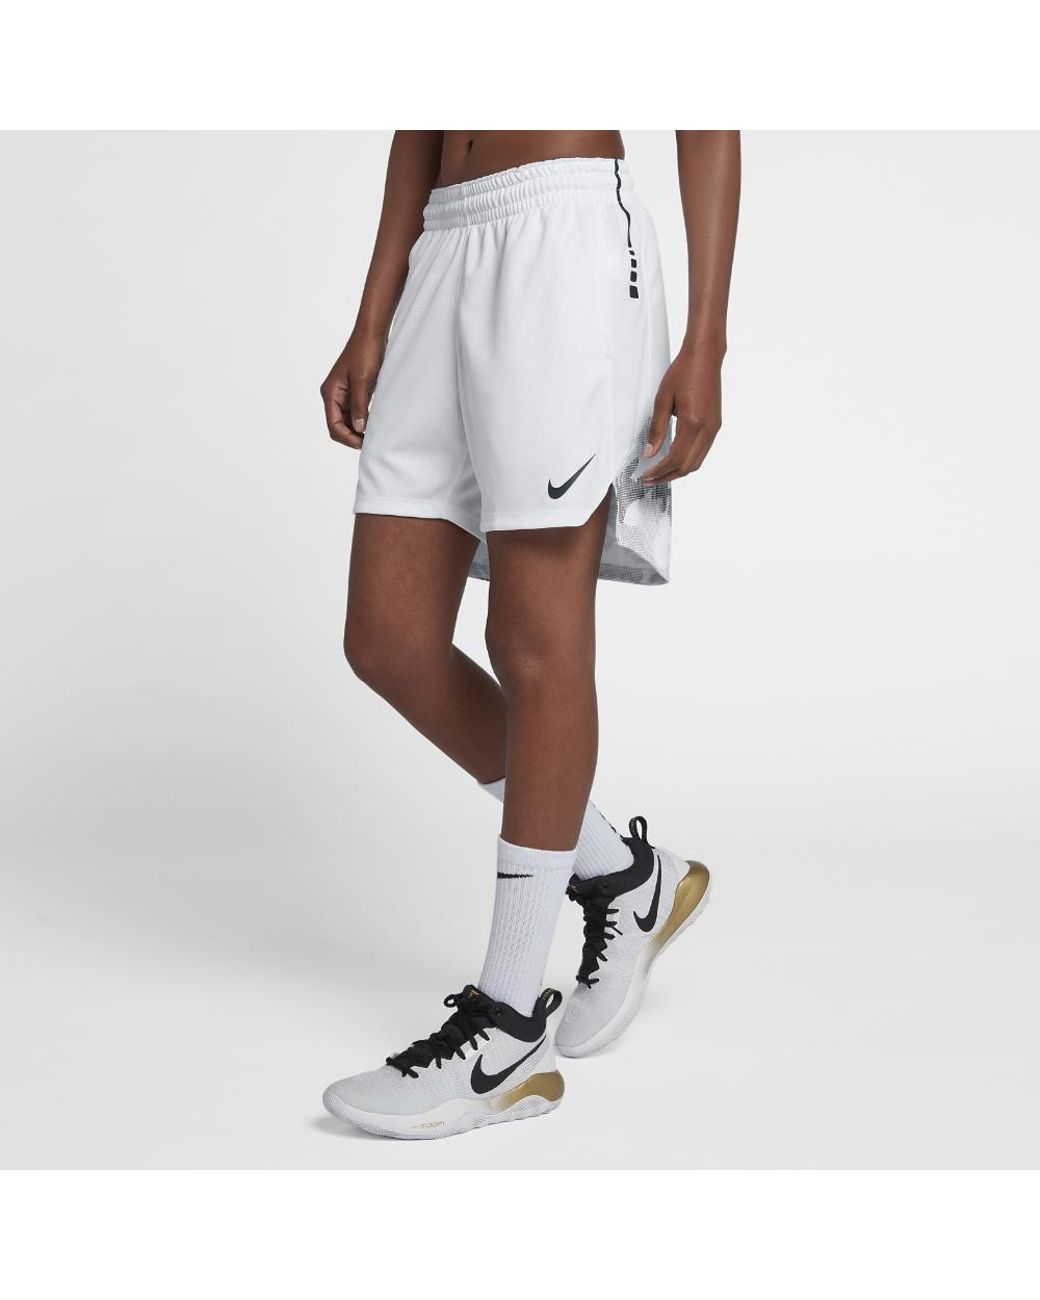 Nike Elite Women's Knit Basketball Shorts in White | Lyst